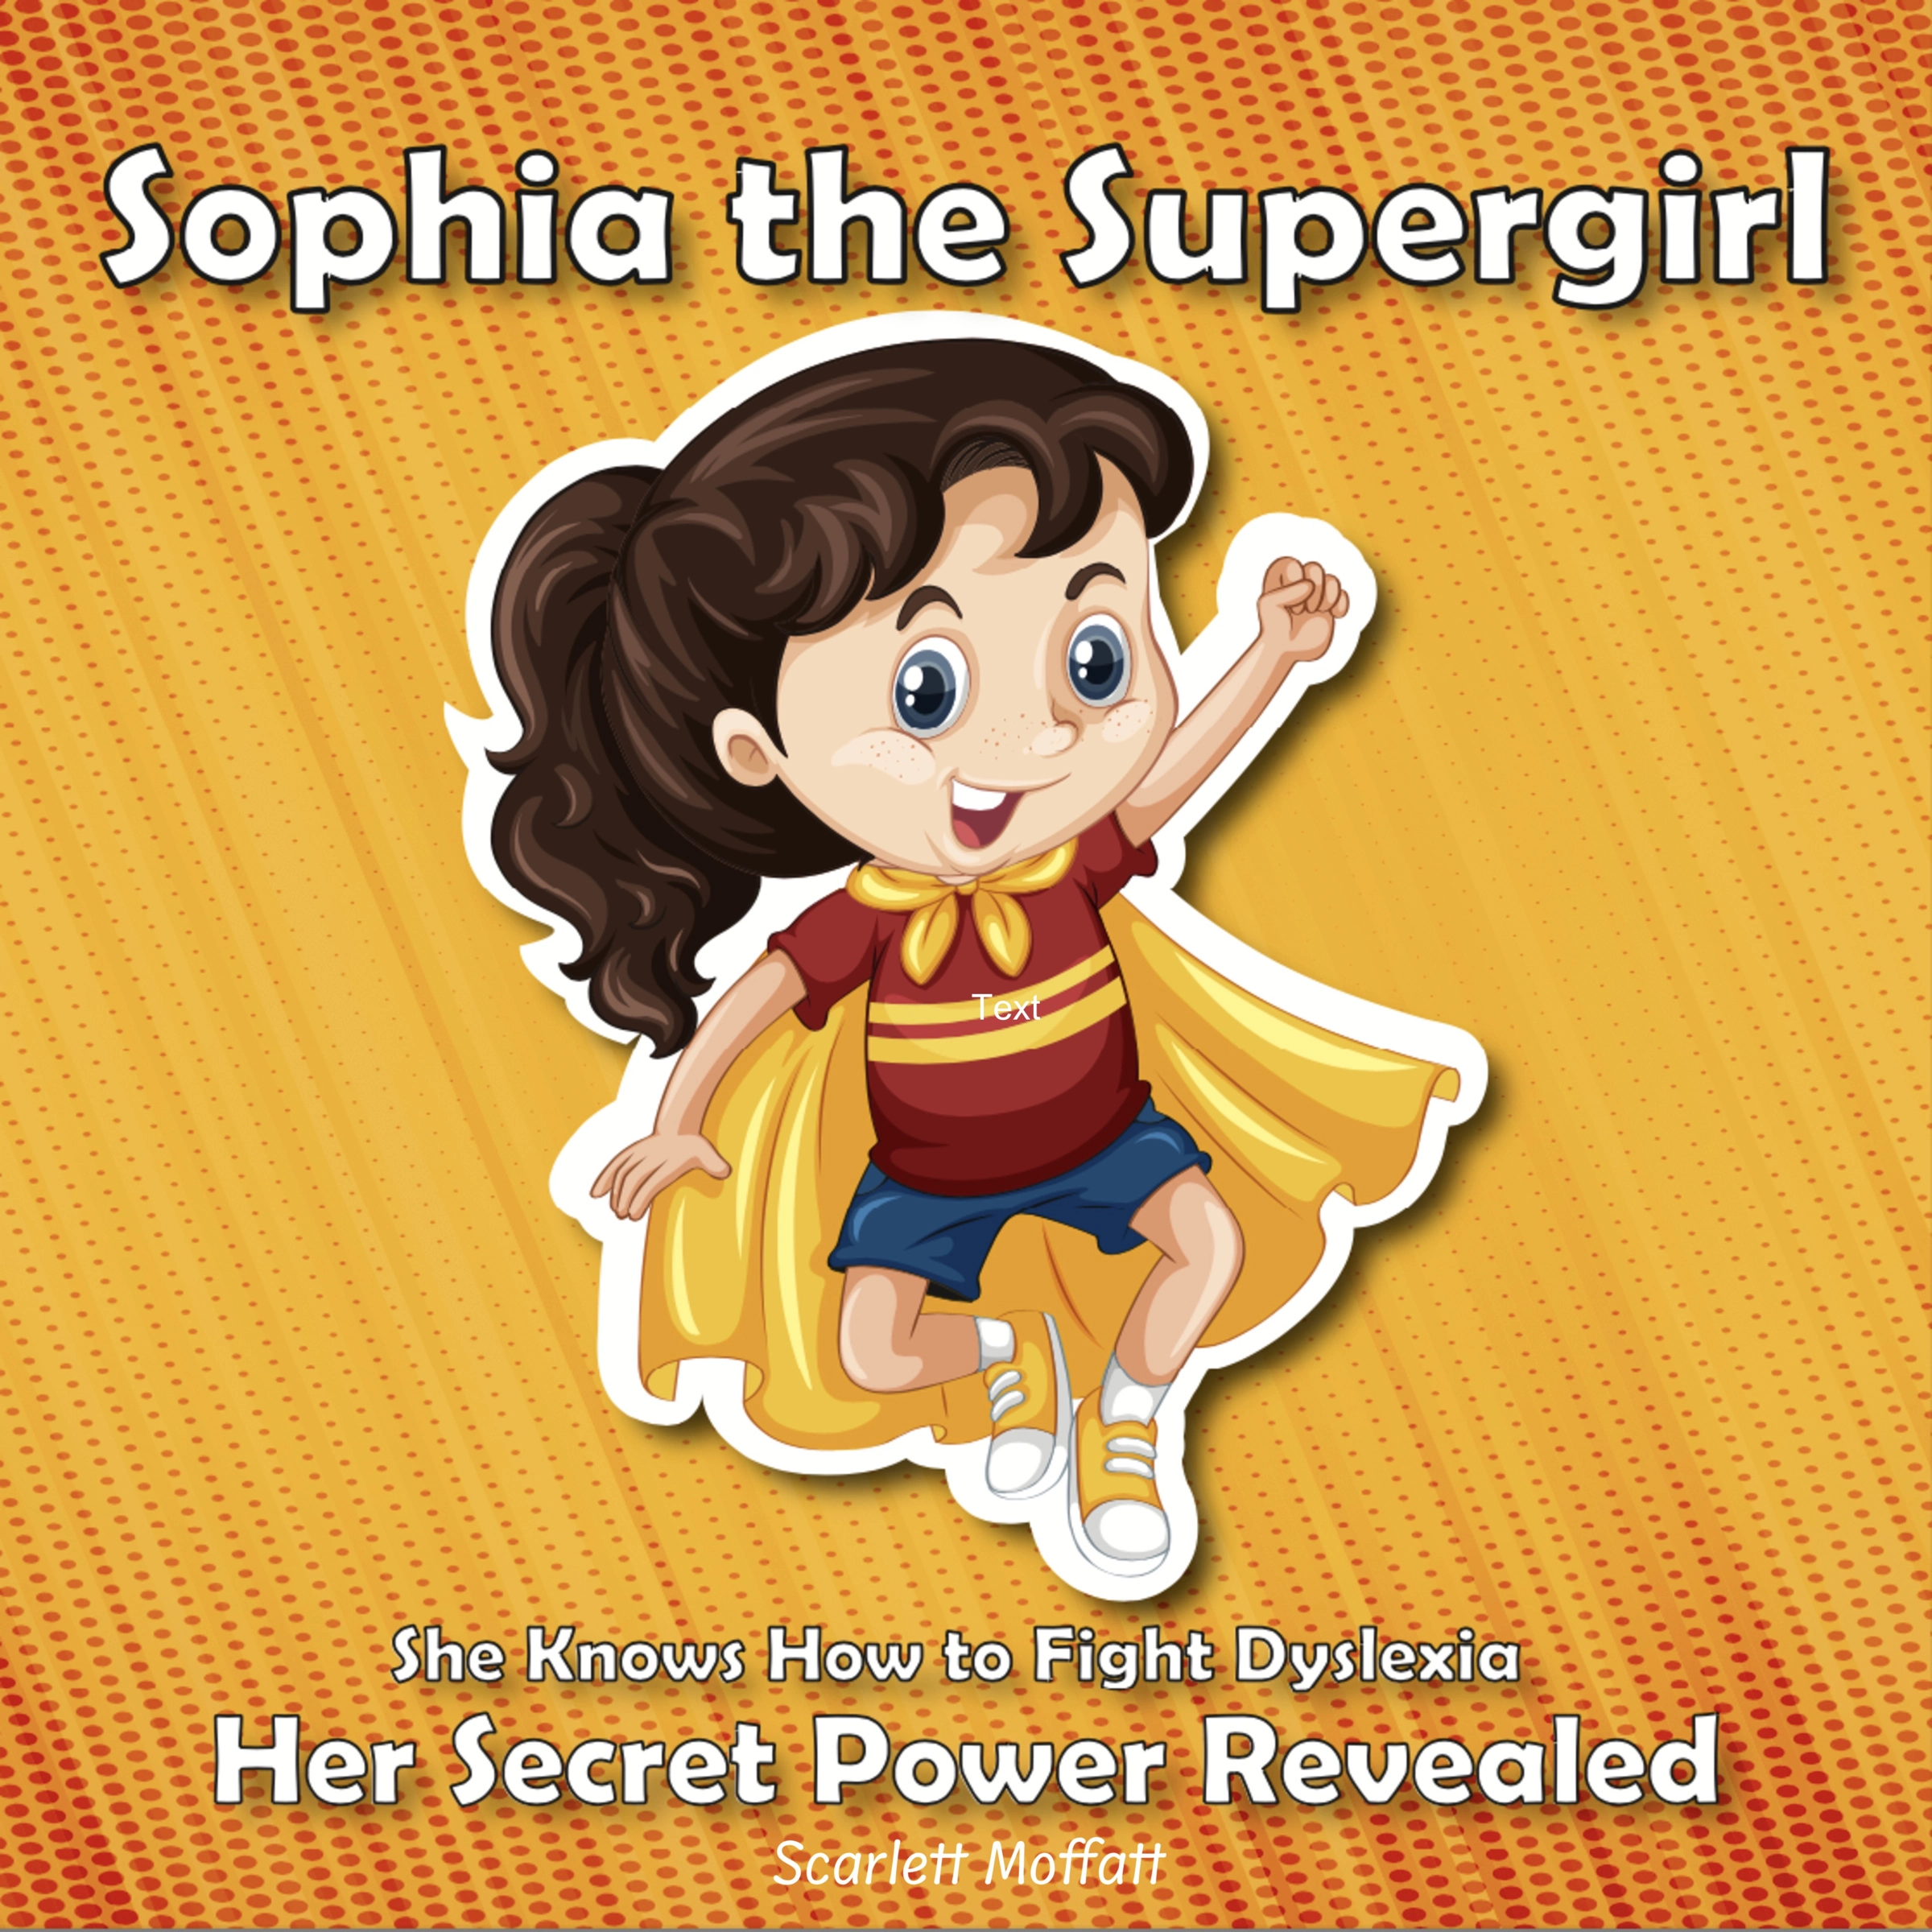 Sophia the Supergirl Audiobook by Scarlett Moffatt